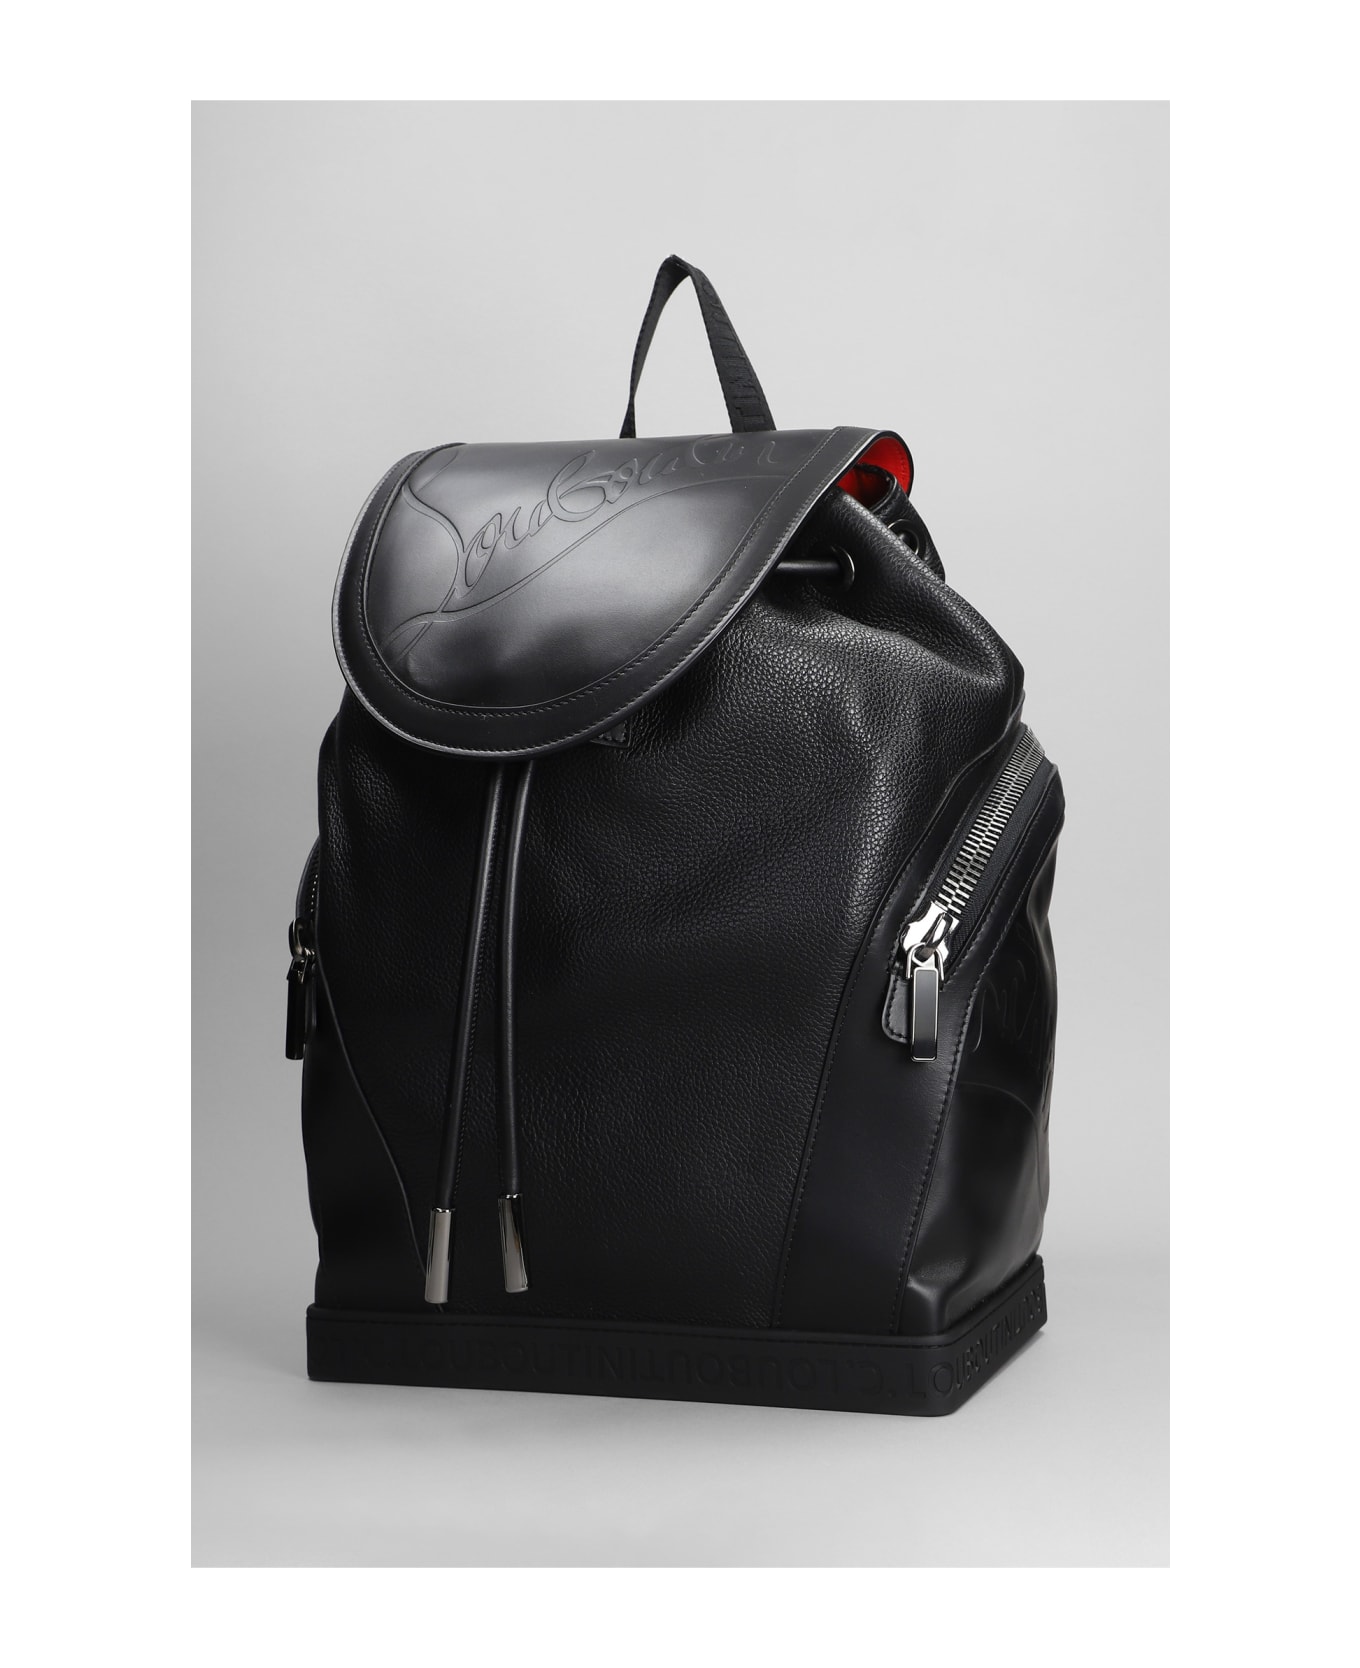 Christian Louboutin Explorafunk S Backpack In Black Leather - black